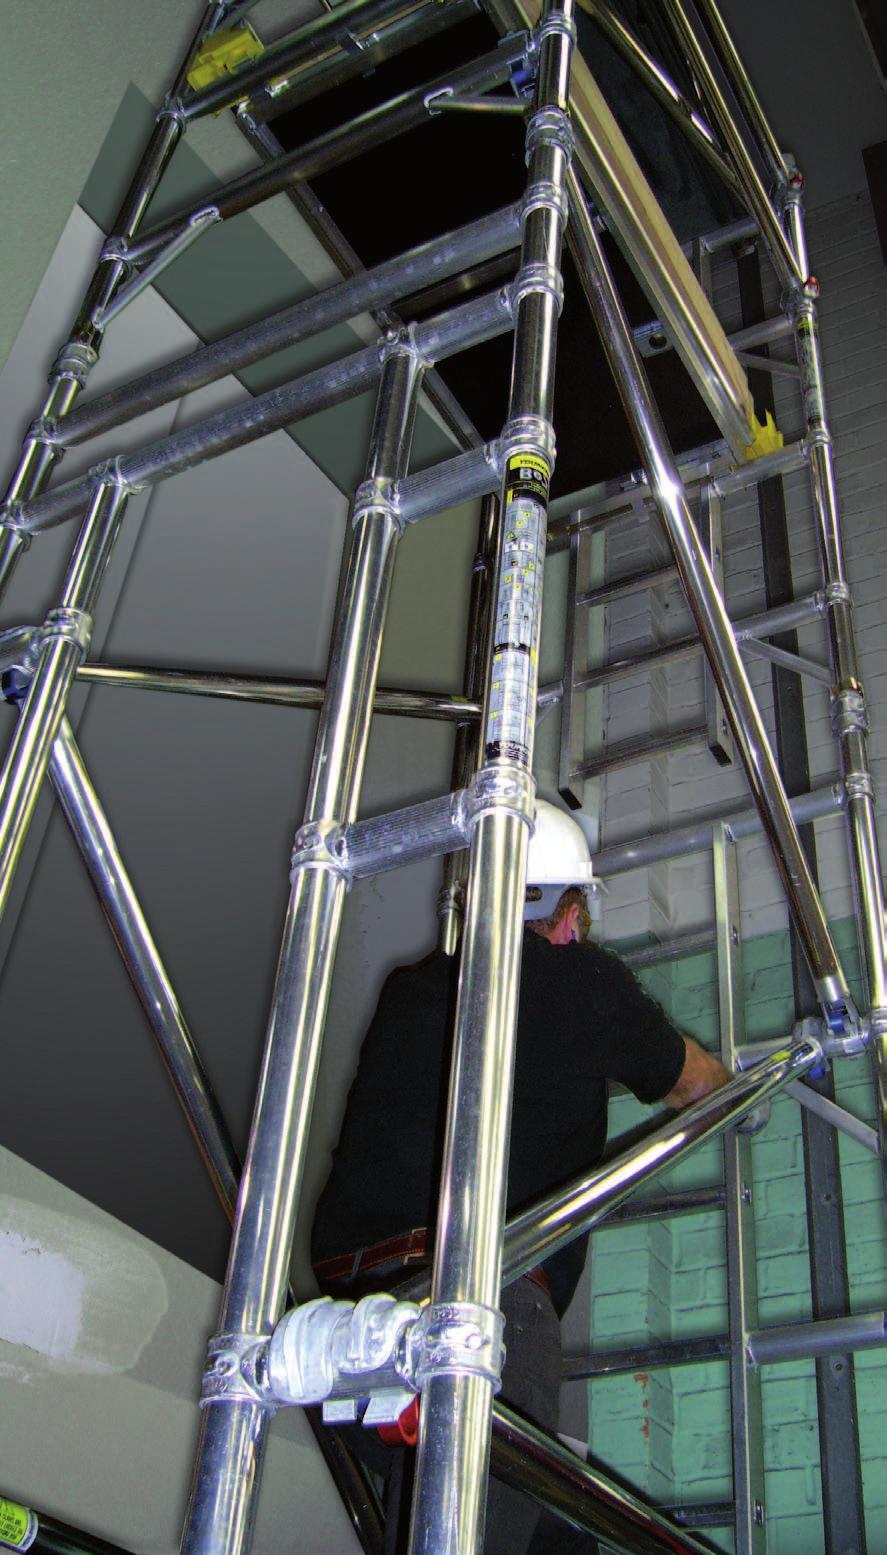 Boss Lift Shaft Lightweight industrial aluminium modular lift shaft/confined space access tower system, ideal for lift shaft installation & servicing or confined